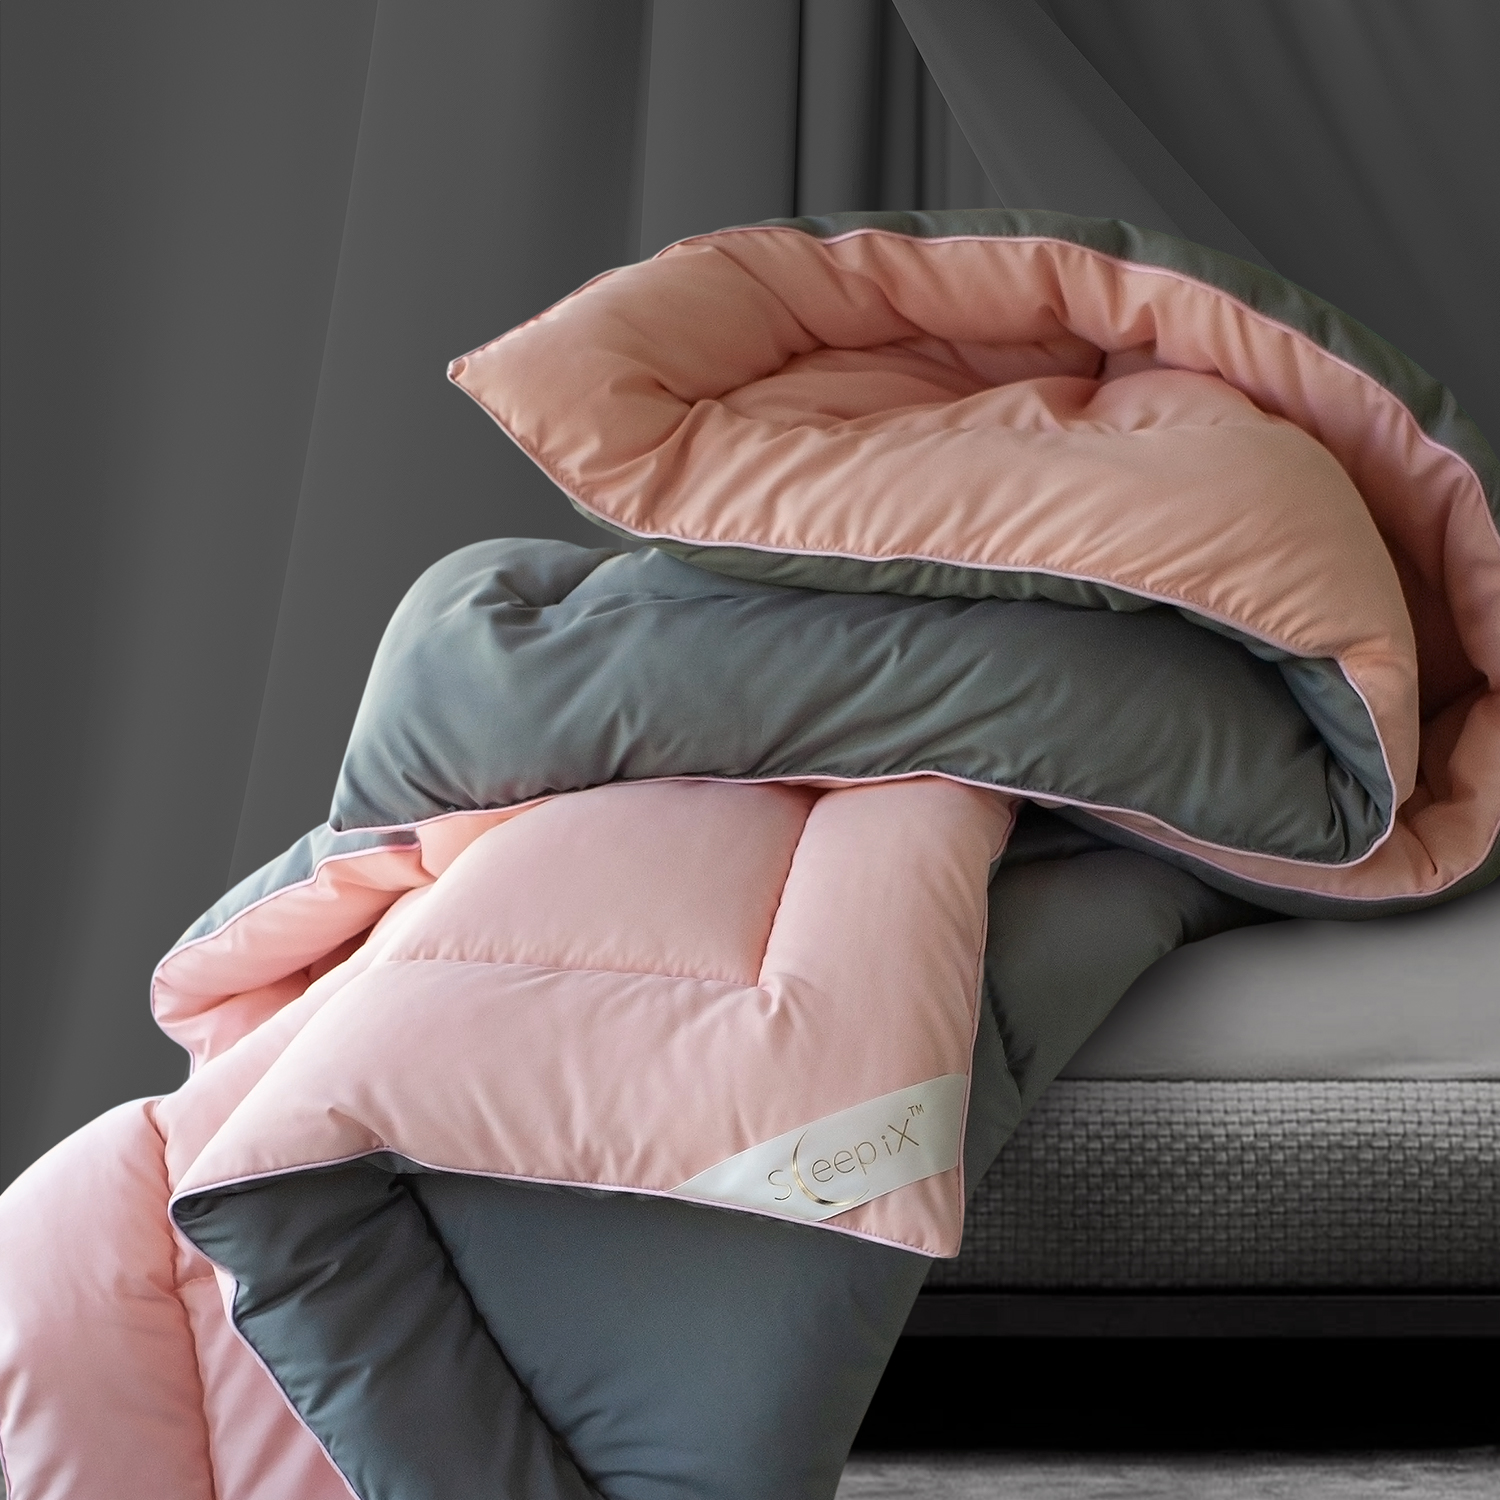 Одеяло MultiColor цвет: розовый, серый (140х205 см), размер 140х205 см pva410844 Одеяло MultiColor цвет: розовый, серый (140х205 см) - фото 1